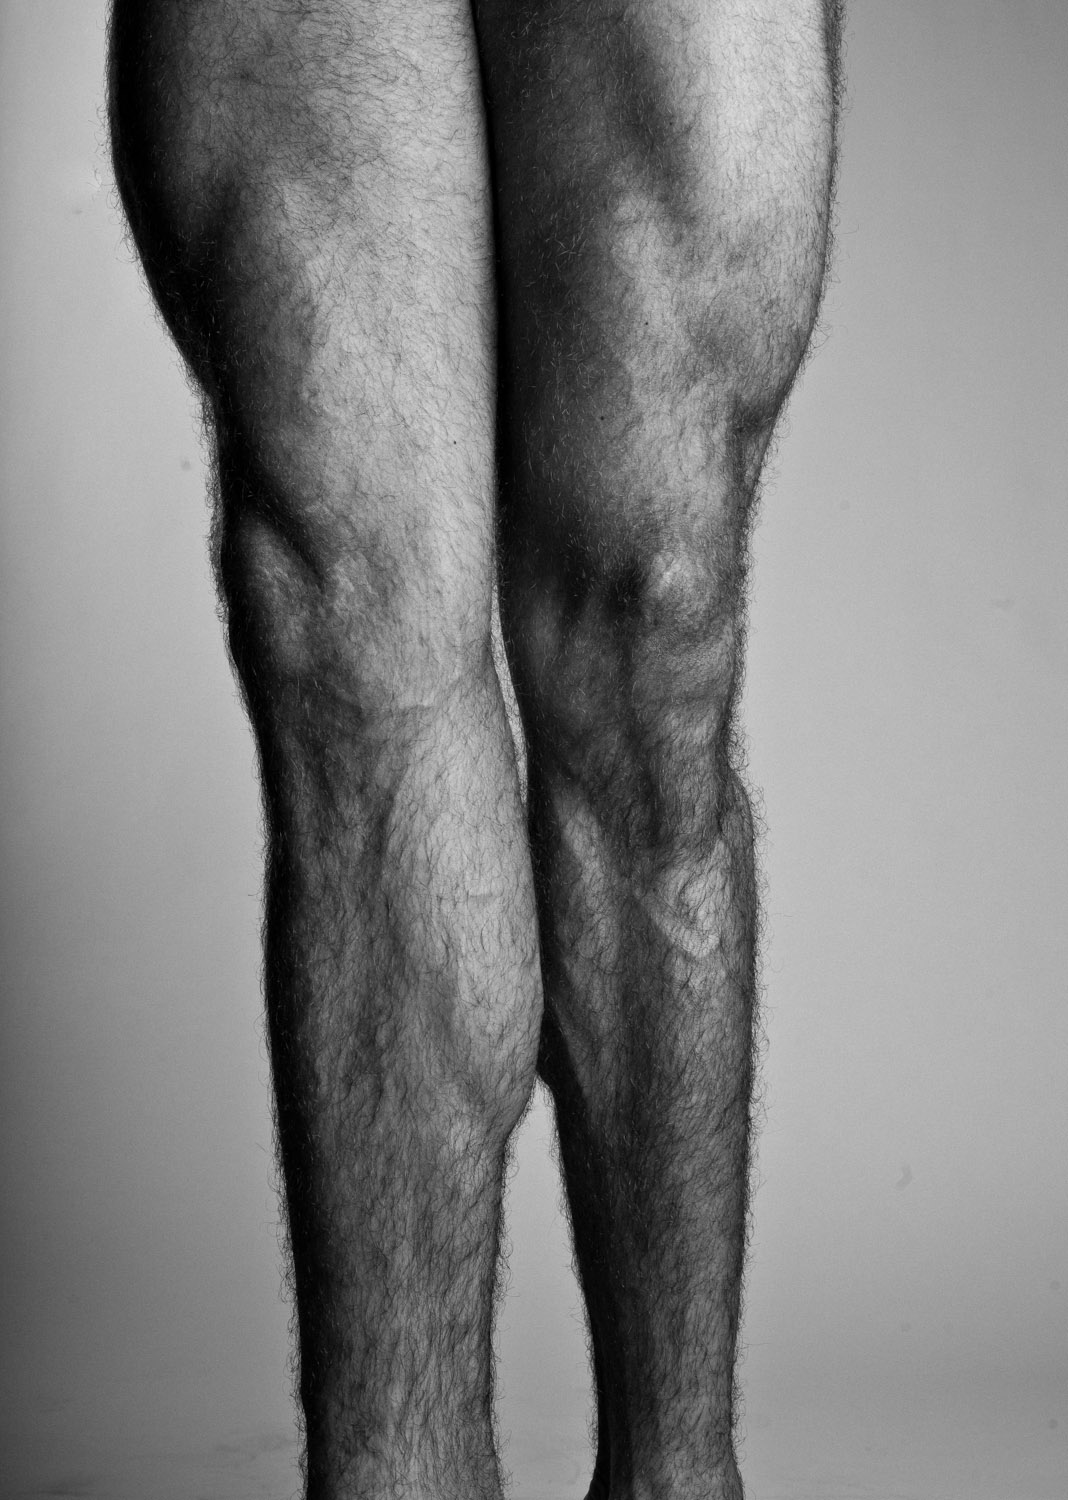 portrait legs